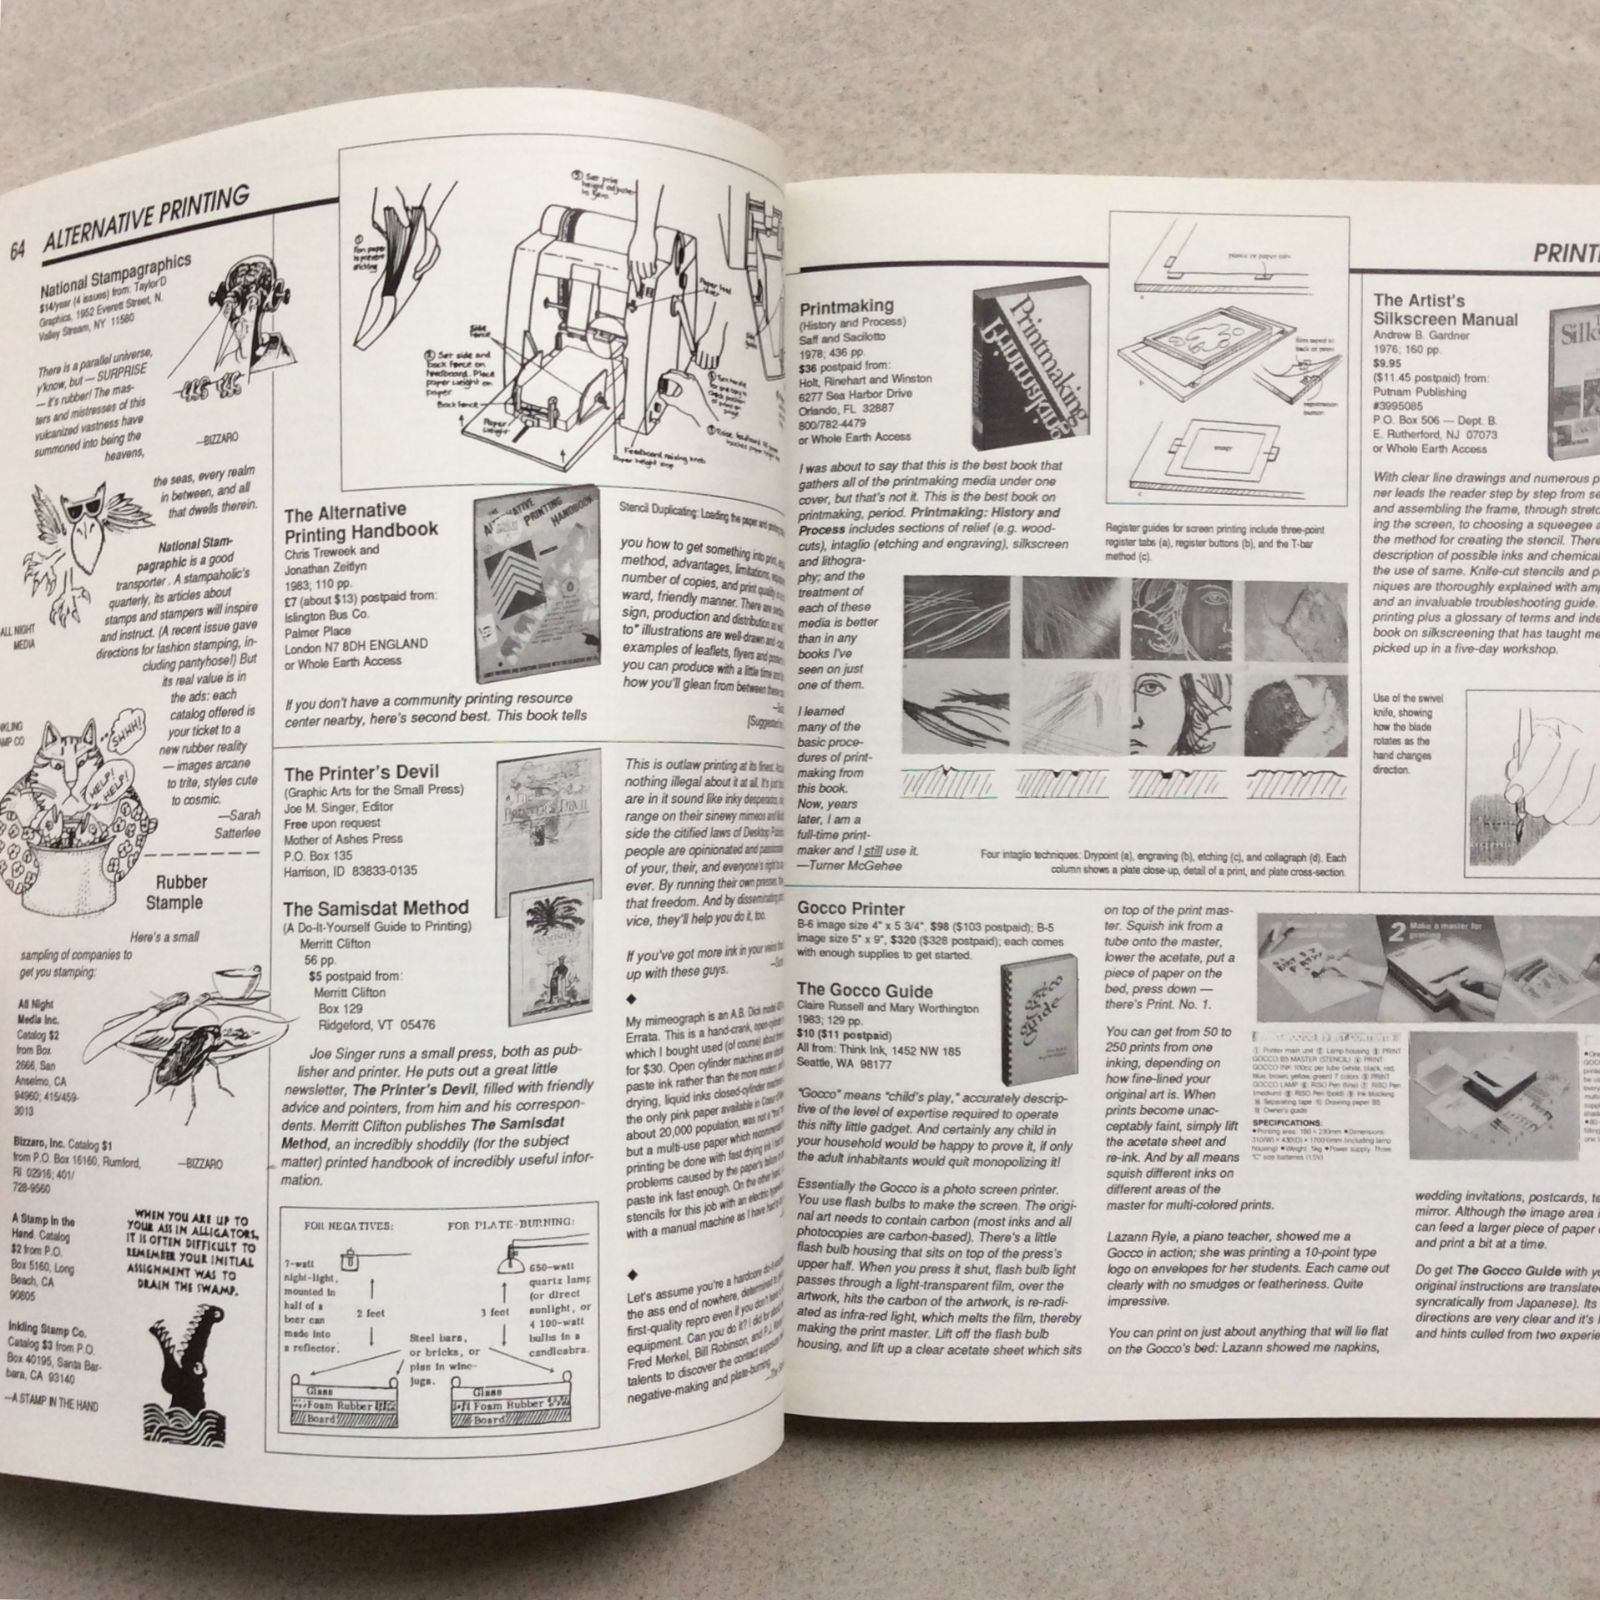 SIGNAL A Whole Earth Catalog Kevin Kelly